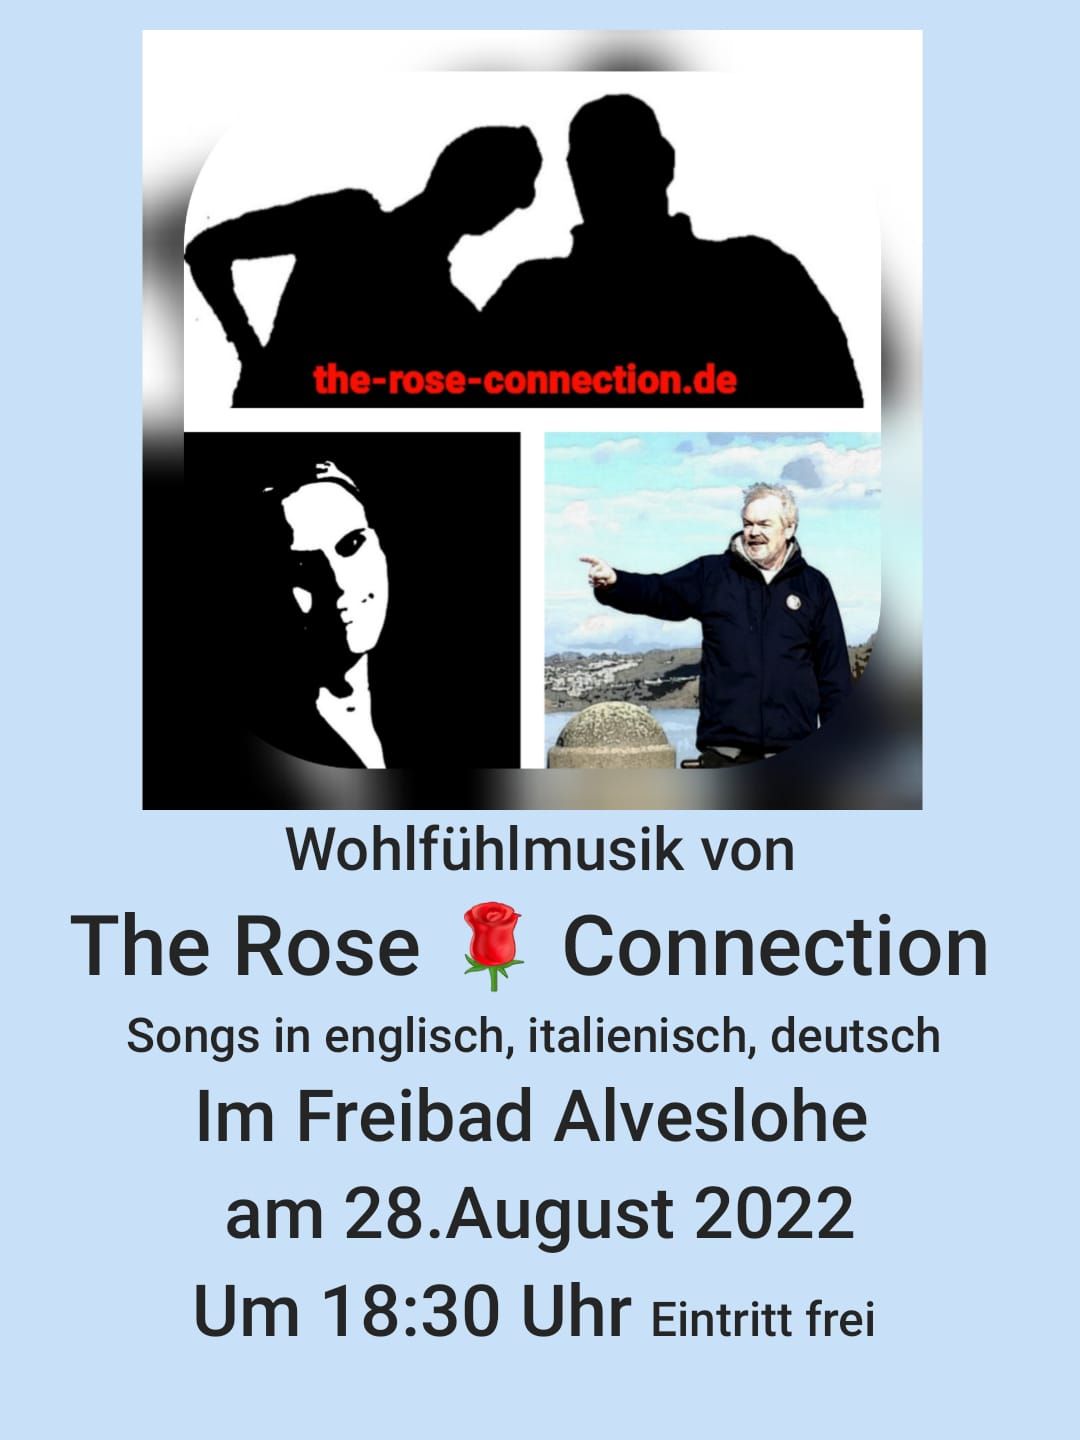 The Rose Connection - Live im Freibad Alveslohe am Sonnatg, 28.8.22 um 18.30 Uhr